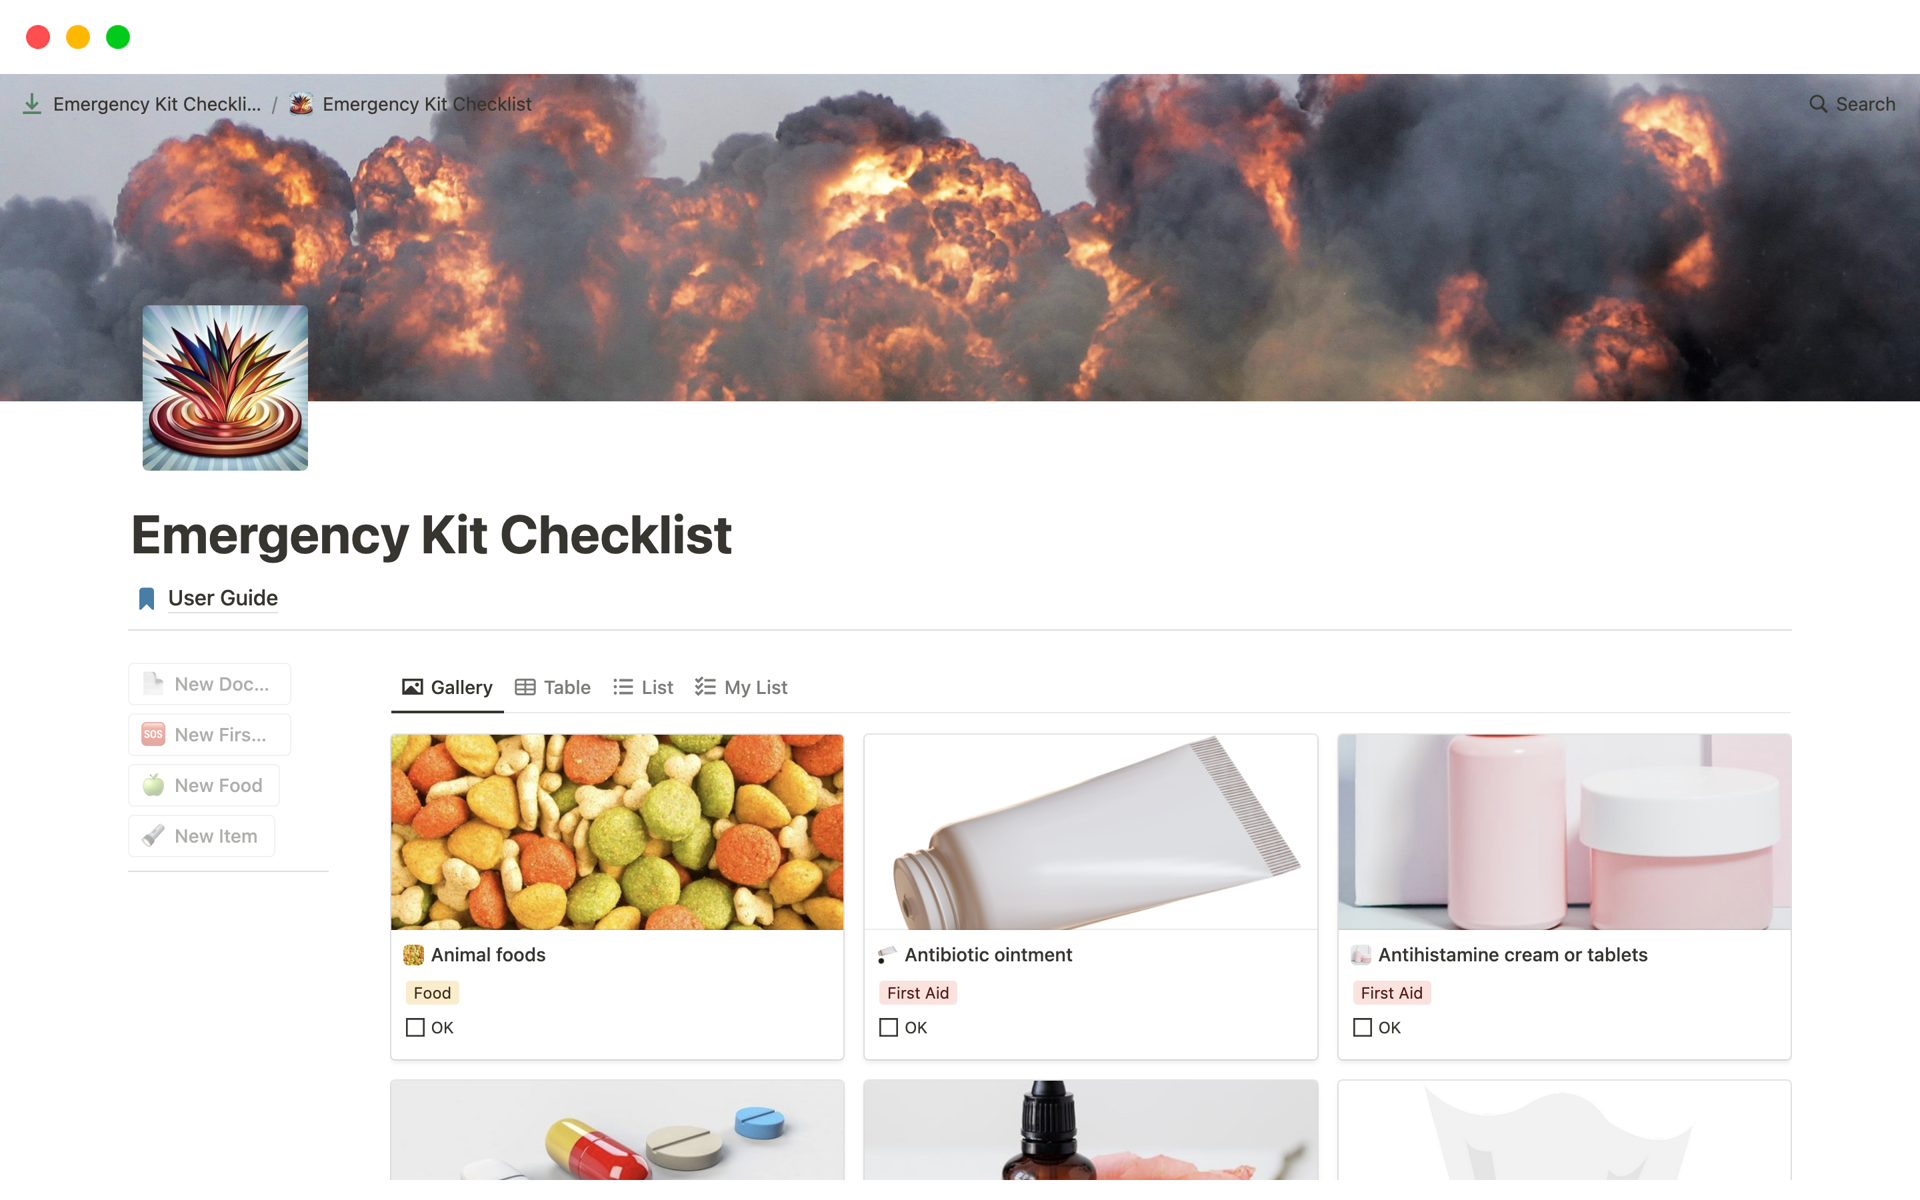 Aperçu du modèle de Emergency Kit Checklist